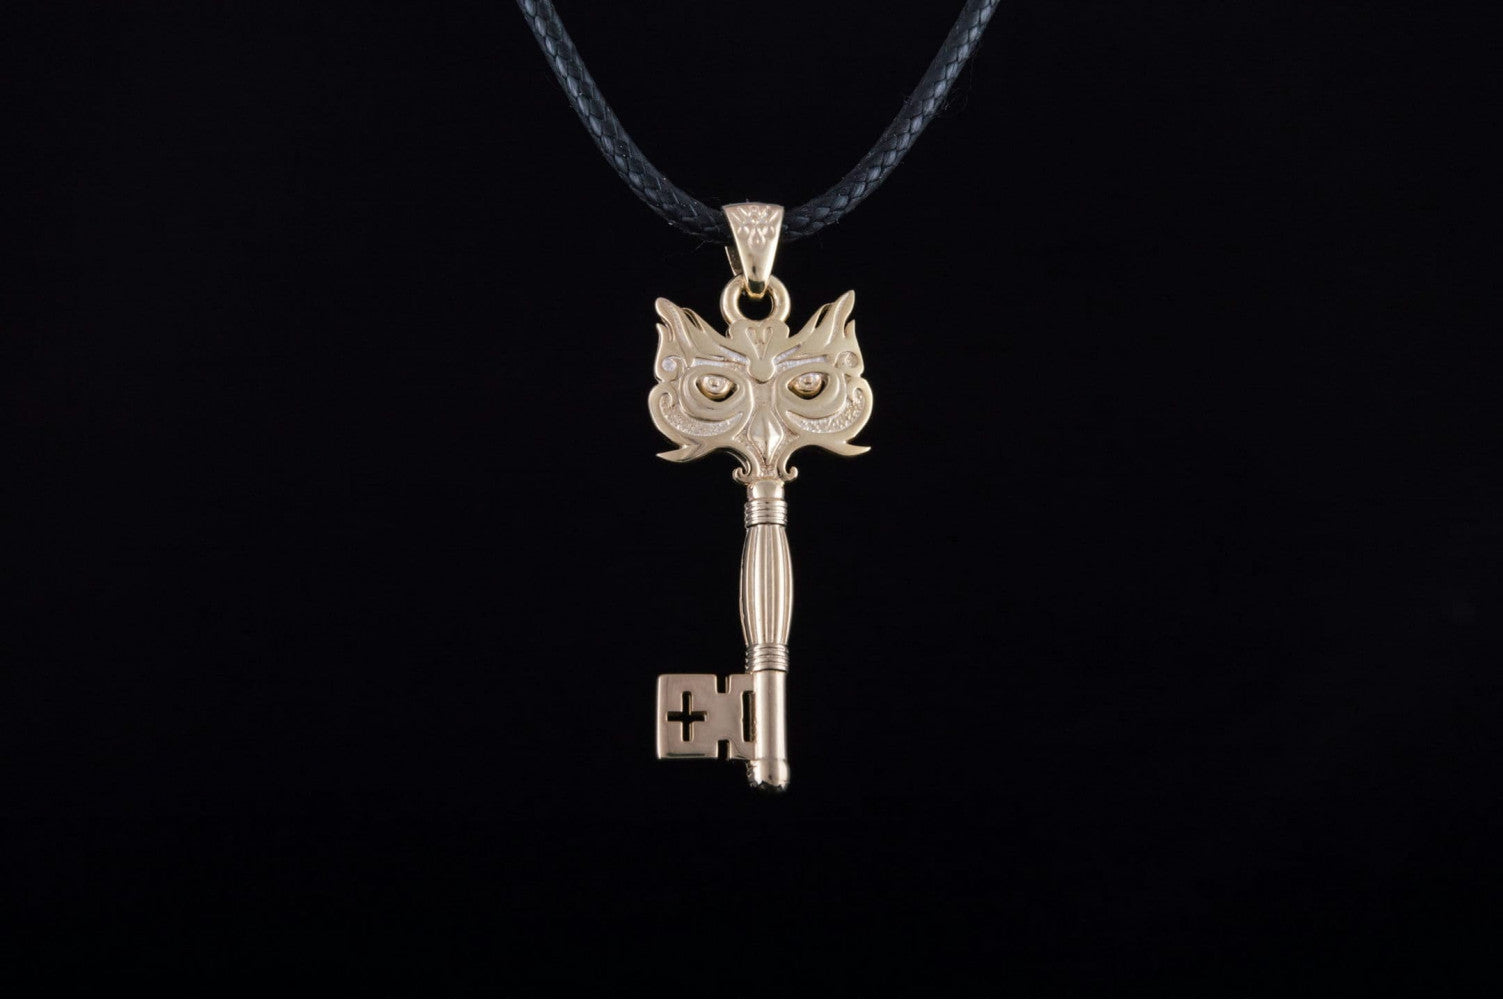 14K Gold Handmade Key Pendant with Owl Unique Jewelry